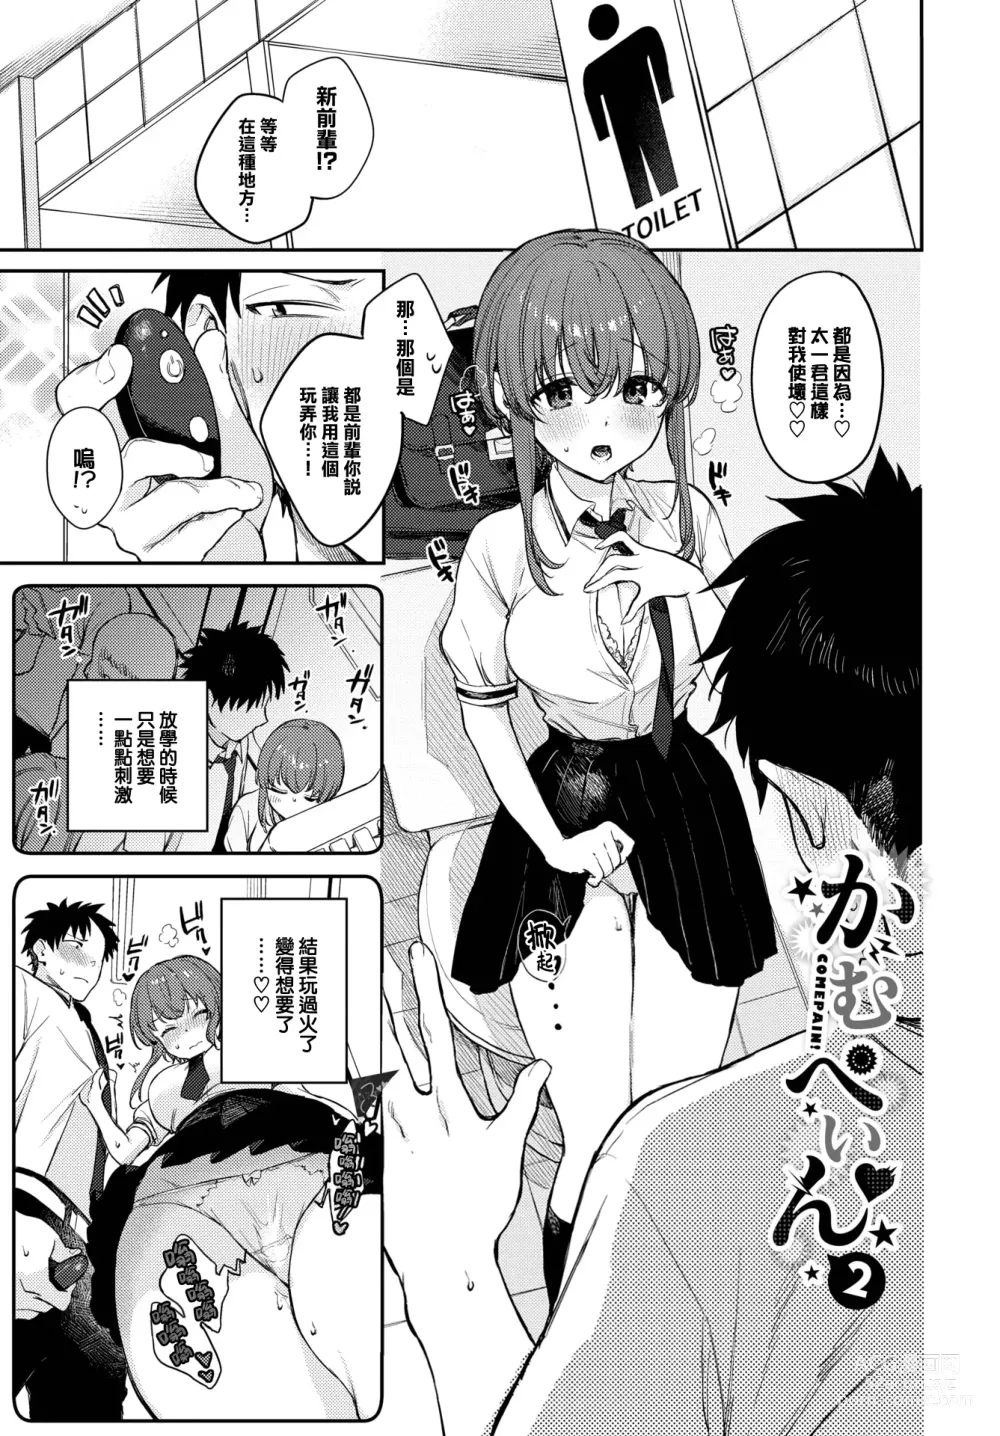 Page 202 of manga Muttsuri Bloom